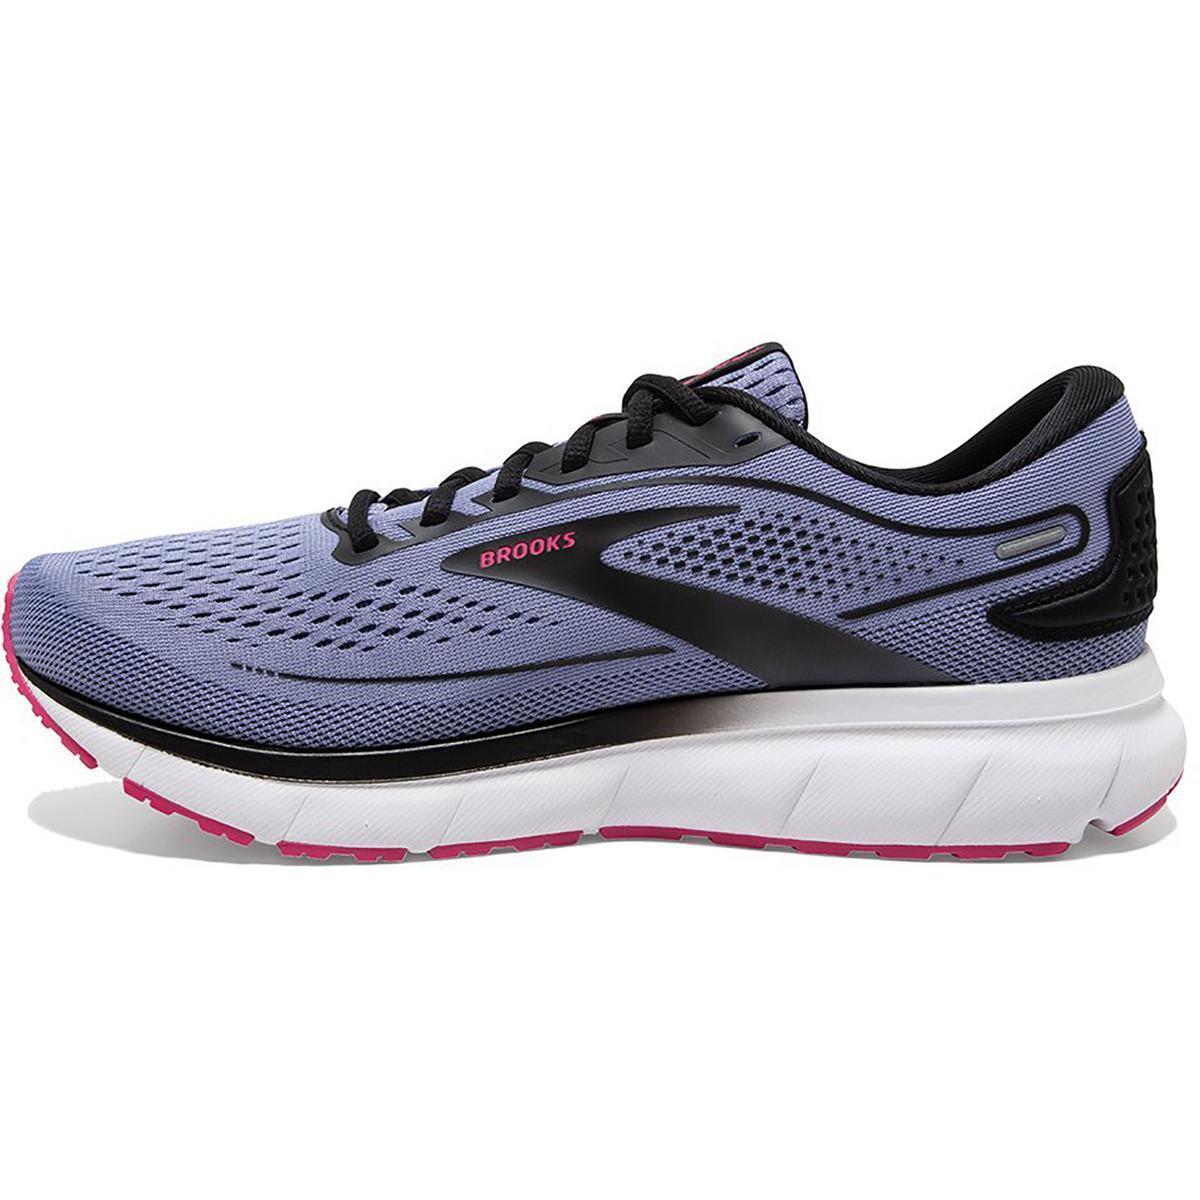 Brooks Womens Trace 2 Purple Running Shoes Sneakers 8.5 Medium B M Bhfo 5393